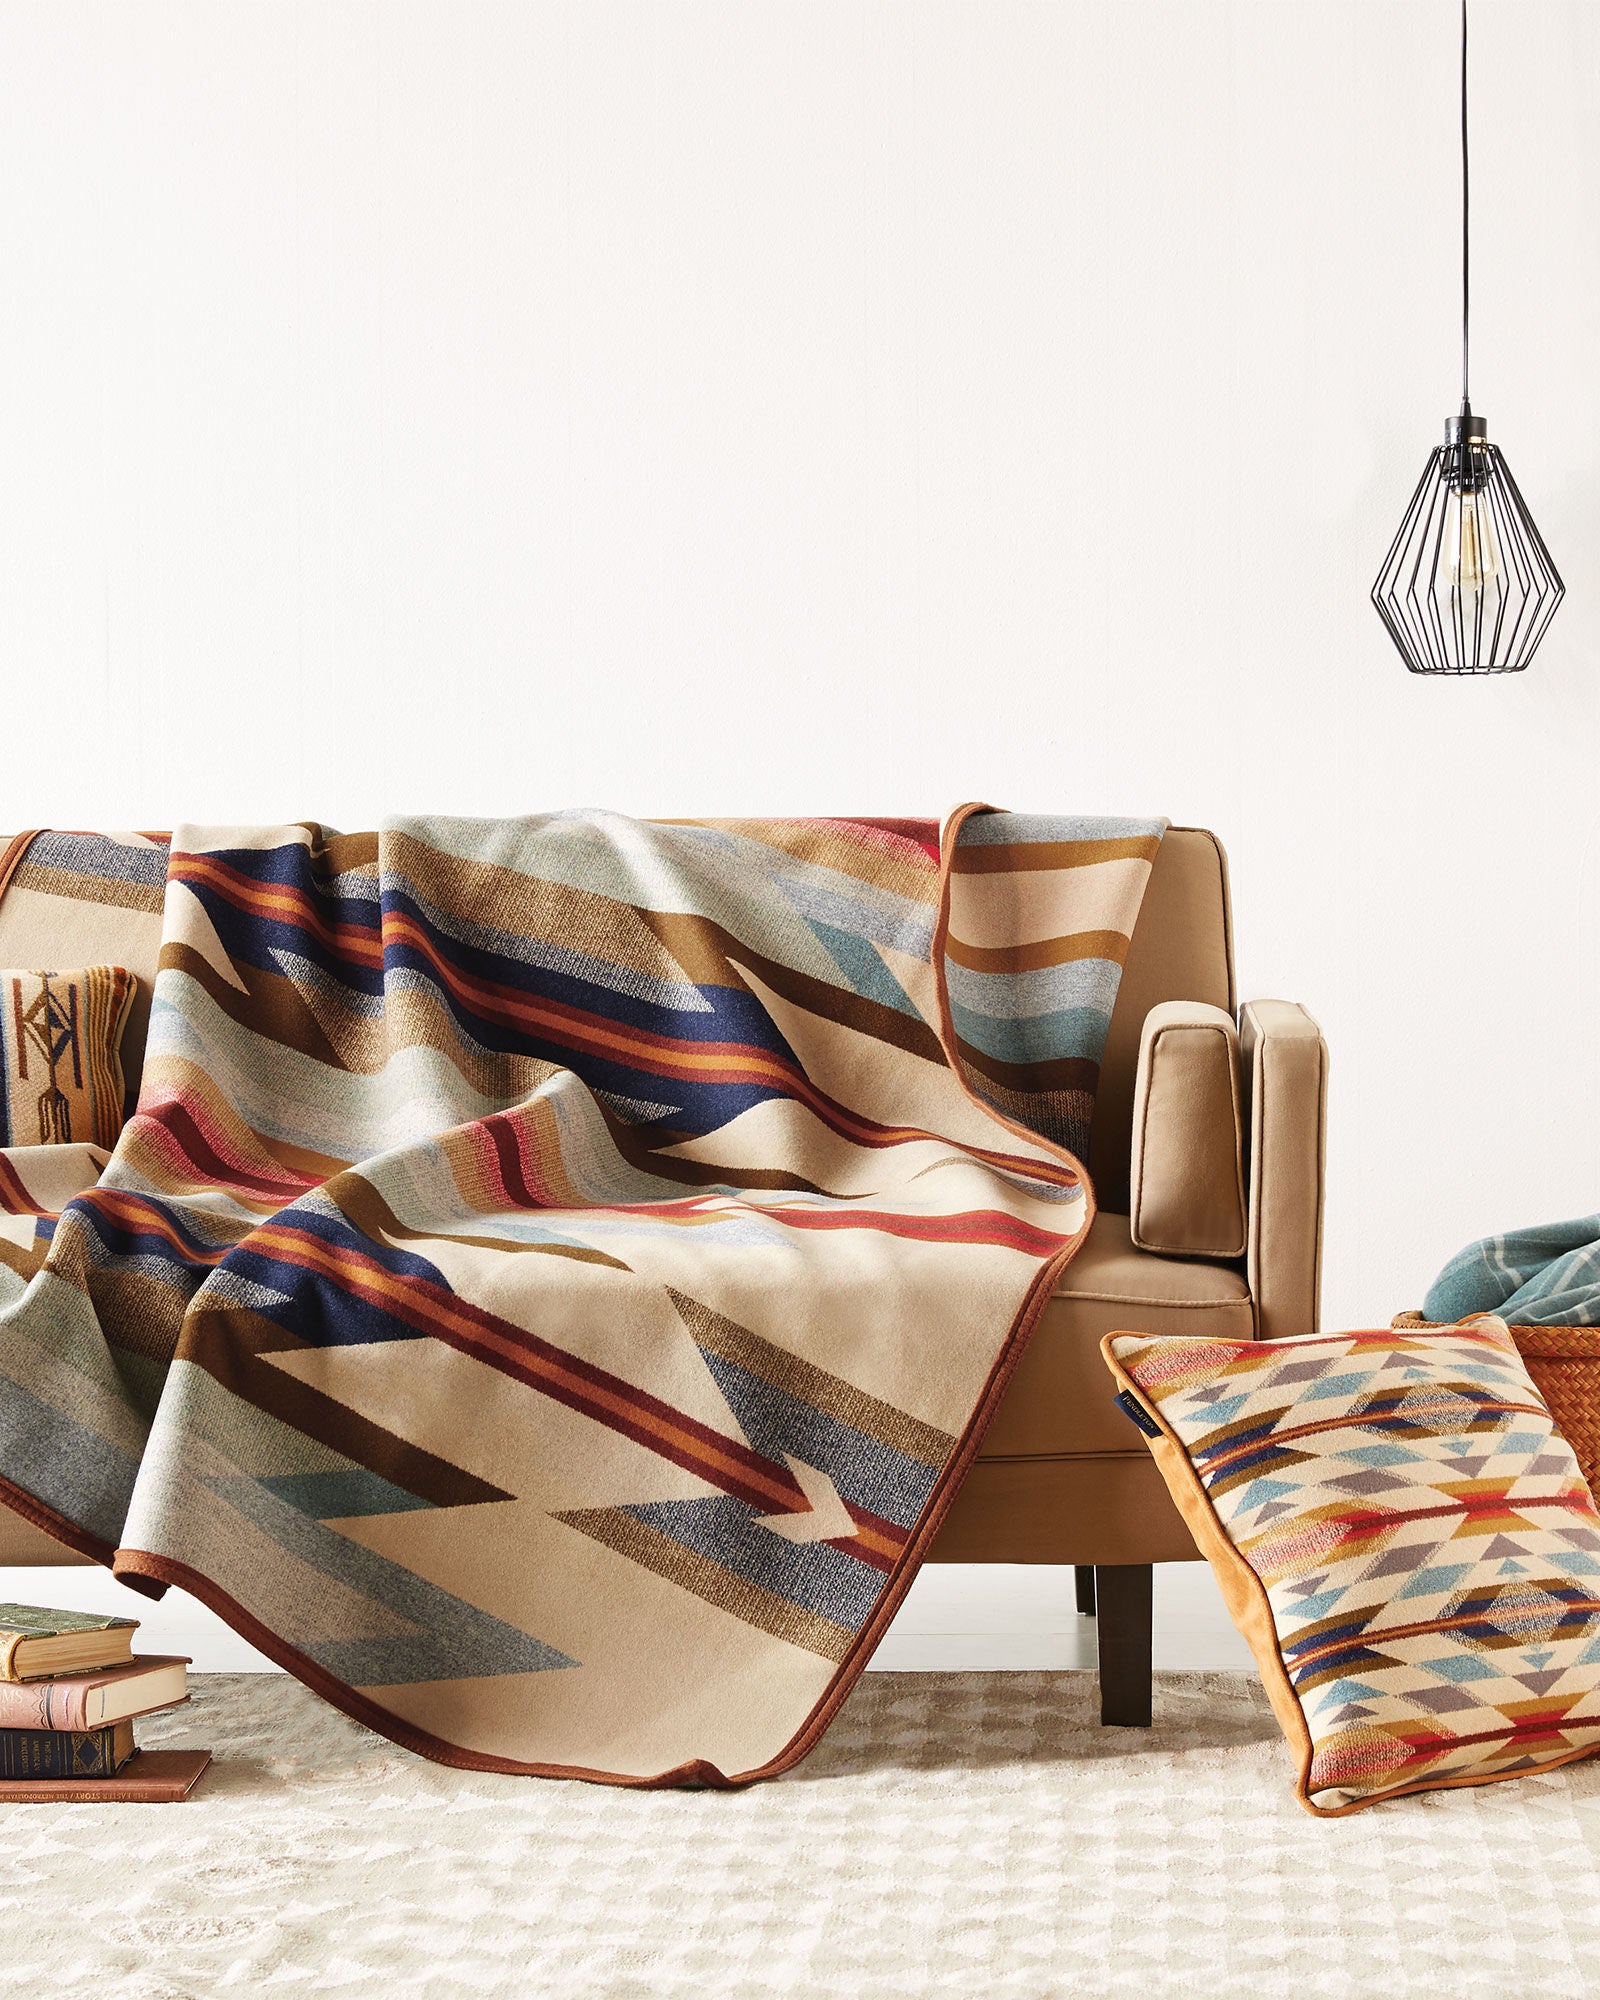 Wyeth trail blanket robe pendleton woolen mills arrows earth tones